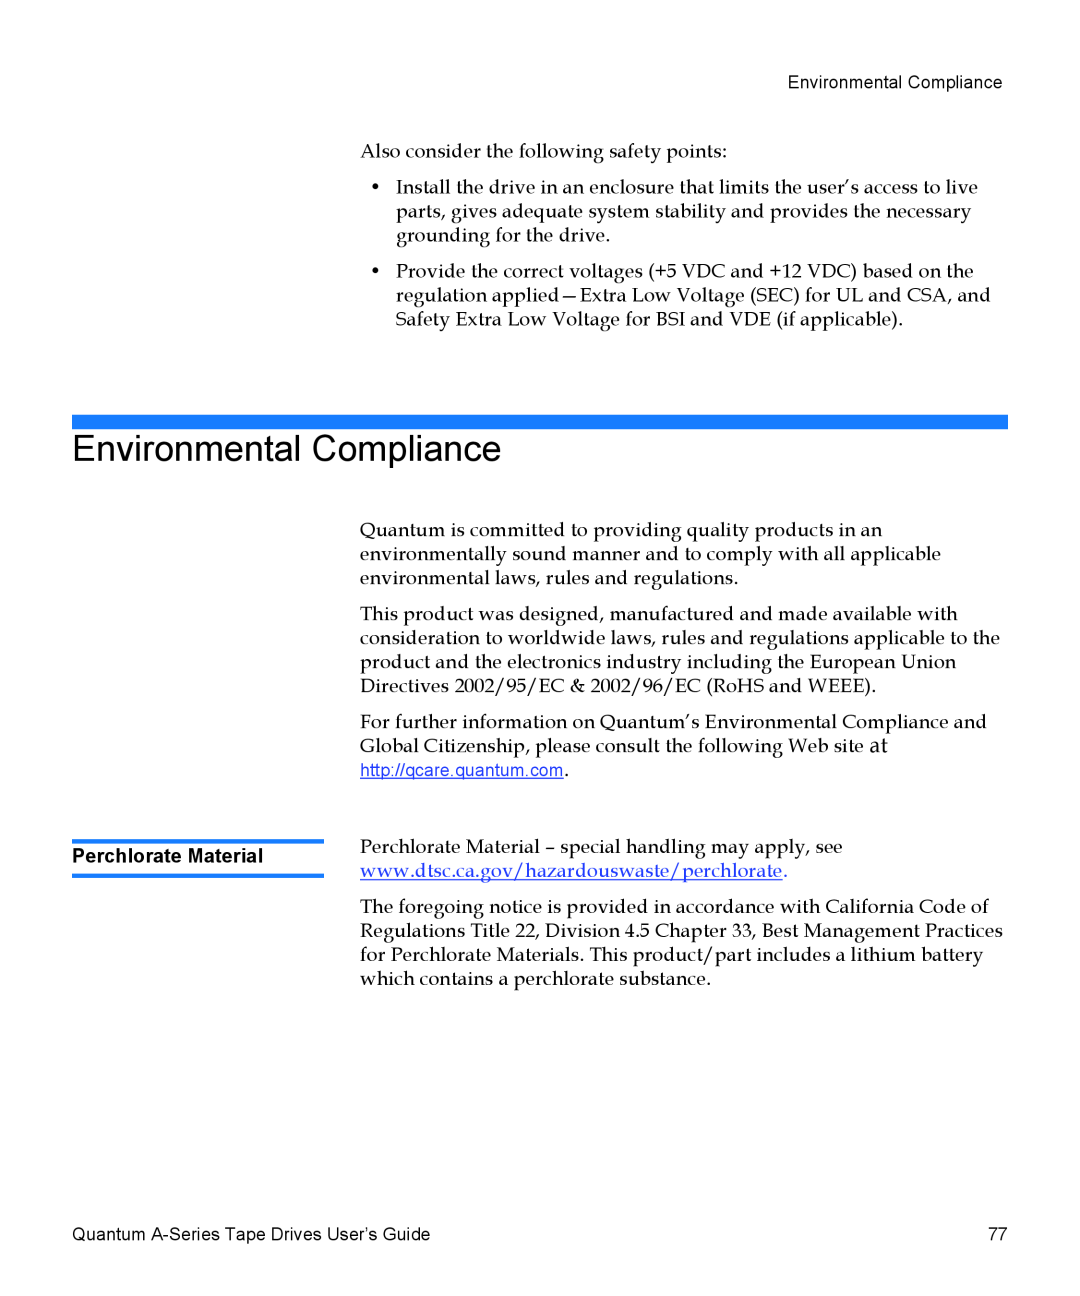 Quantum A-Series manual Environmental Compliance, Perchlorate Material 